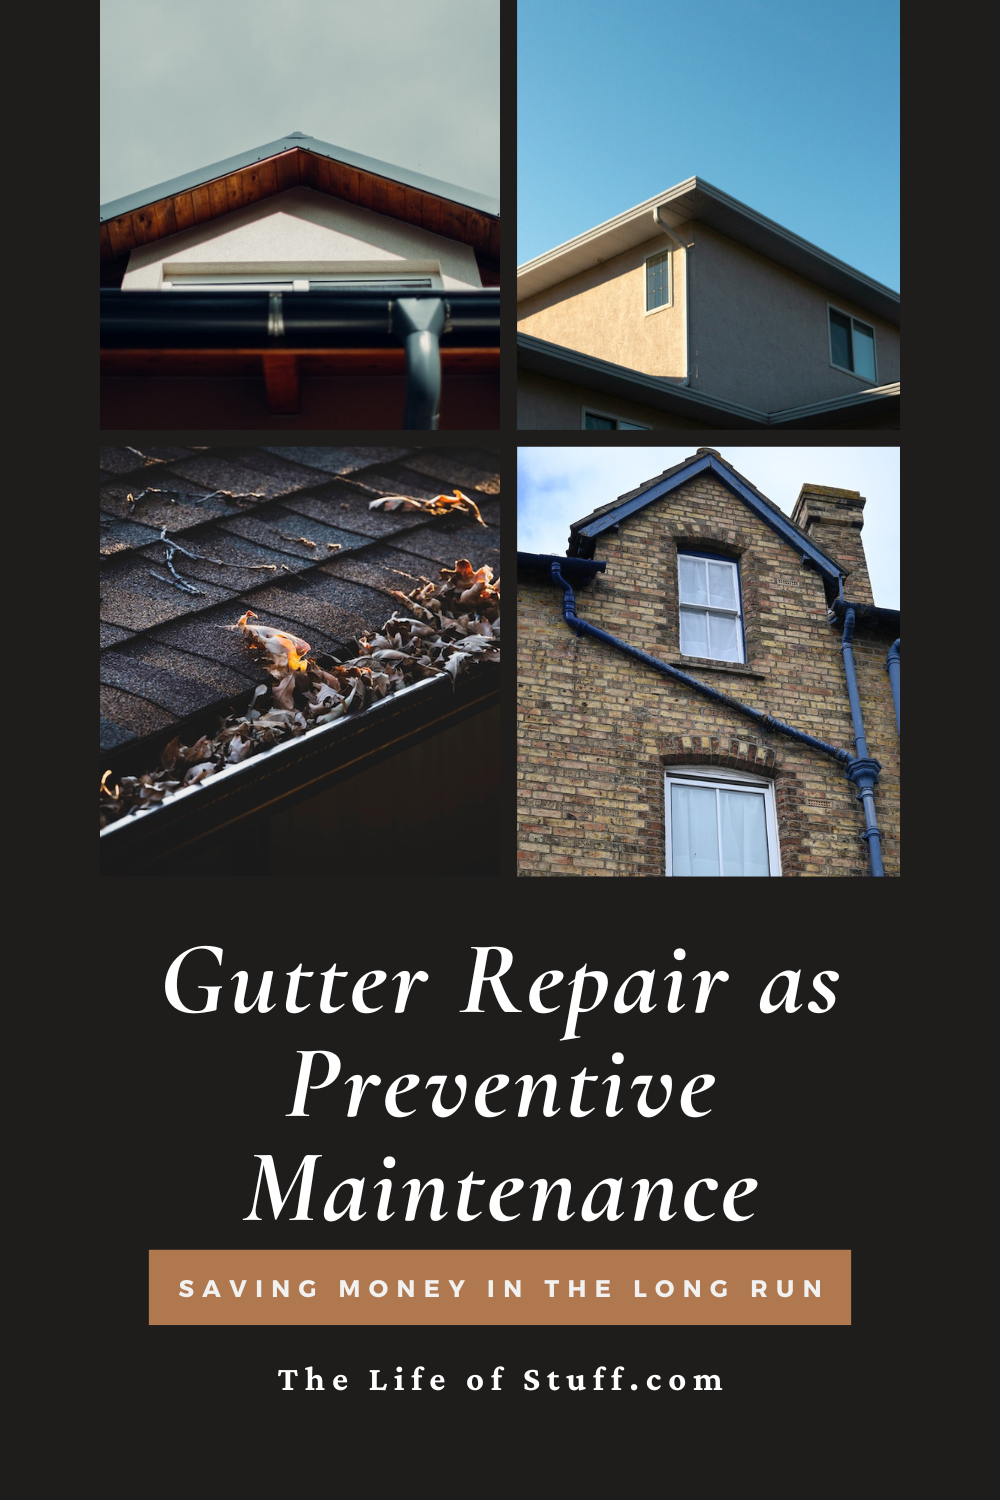 Gutter Repair as Preventive Maintenance - The Life of Stuff